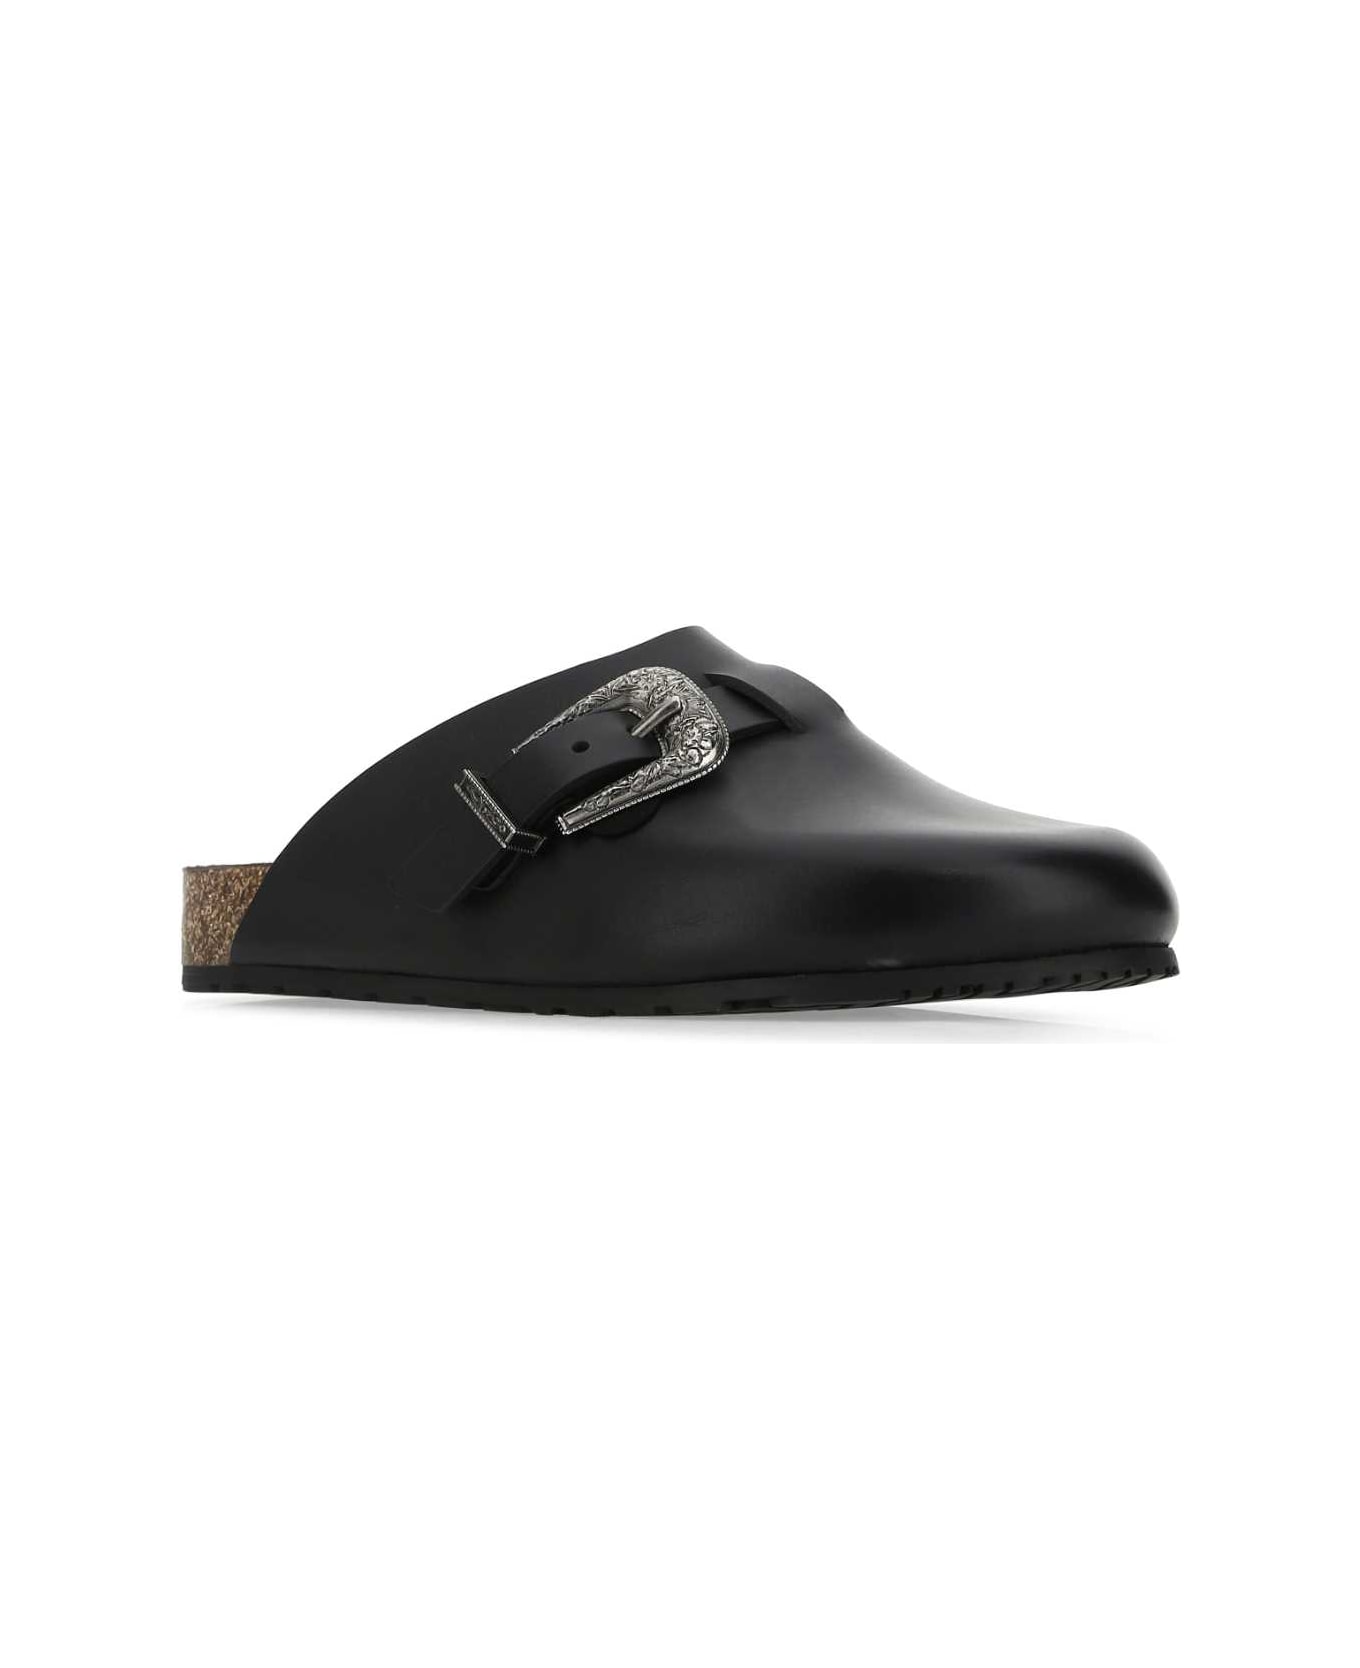 Saint Laurent Black Leather Slippers - 1000